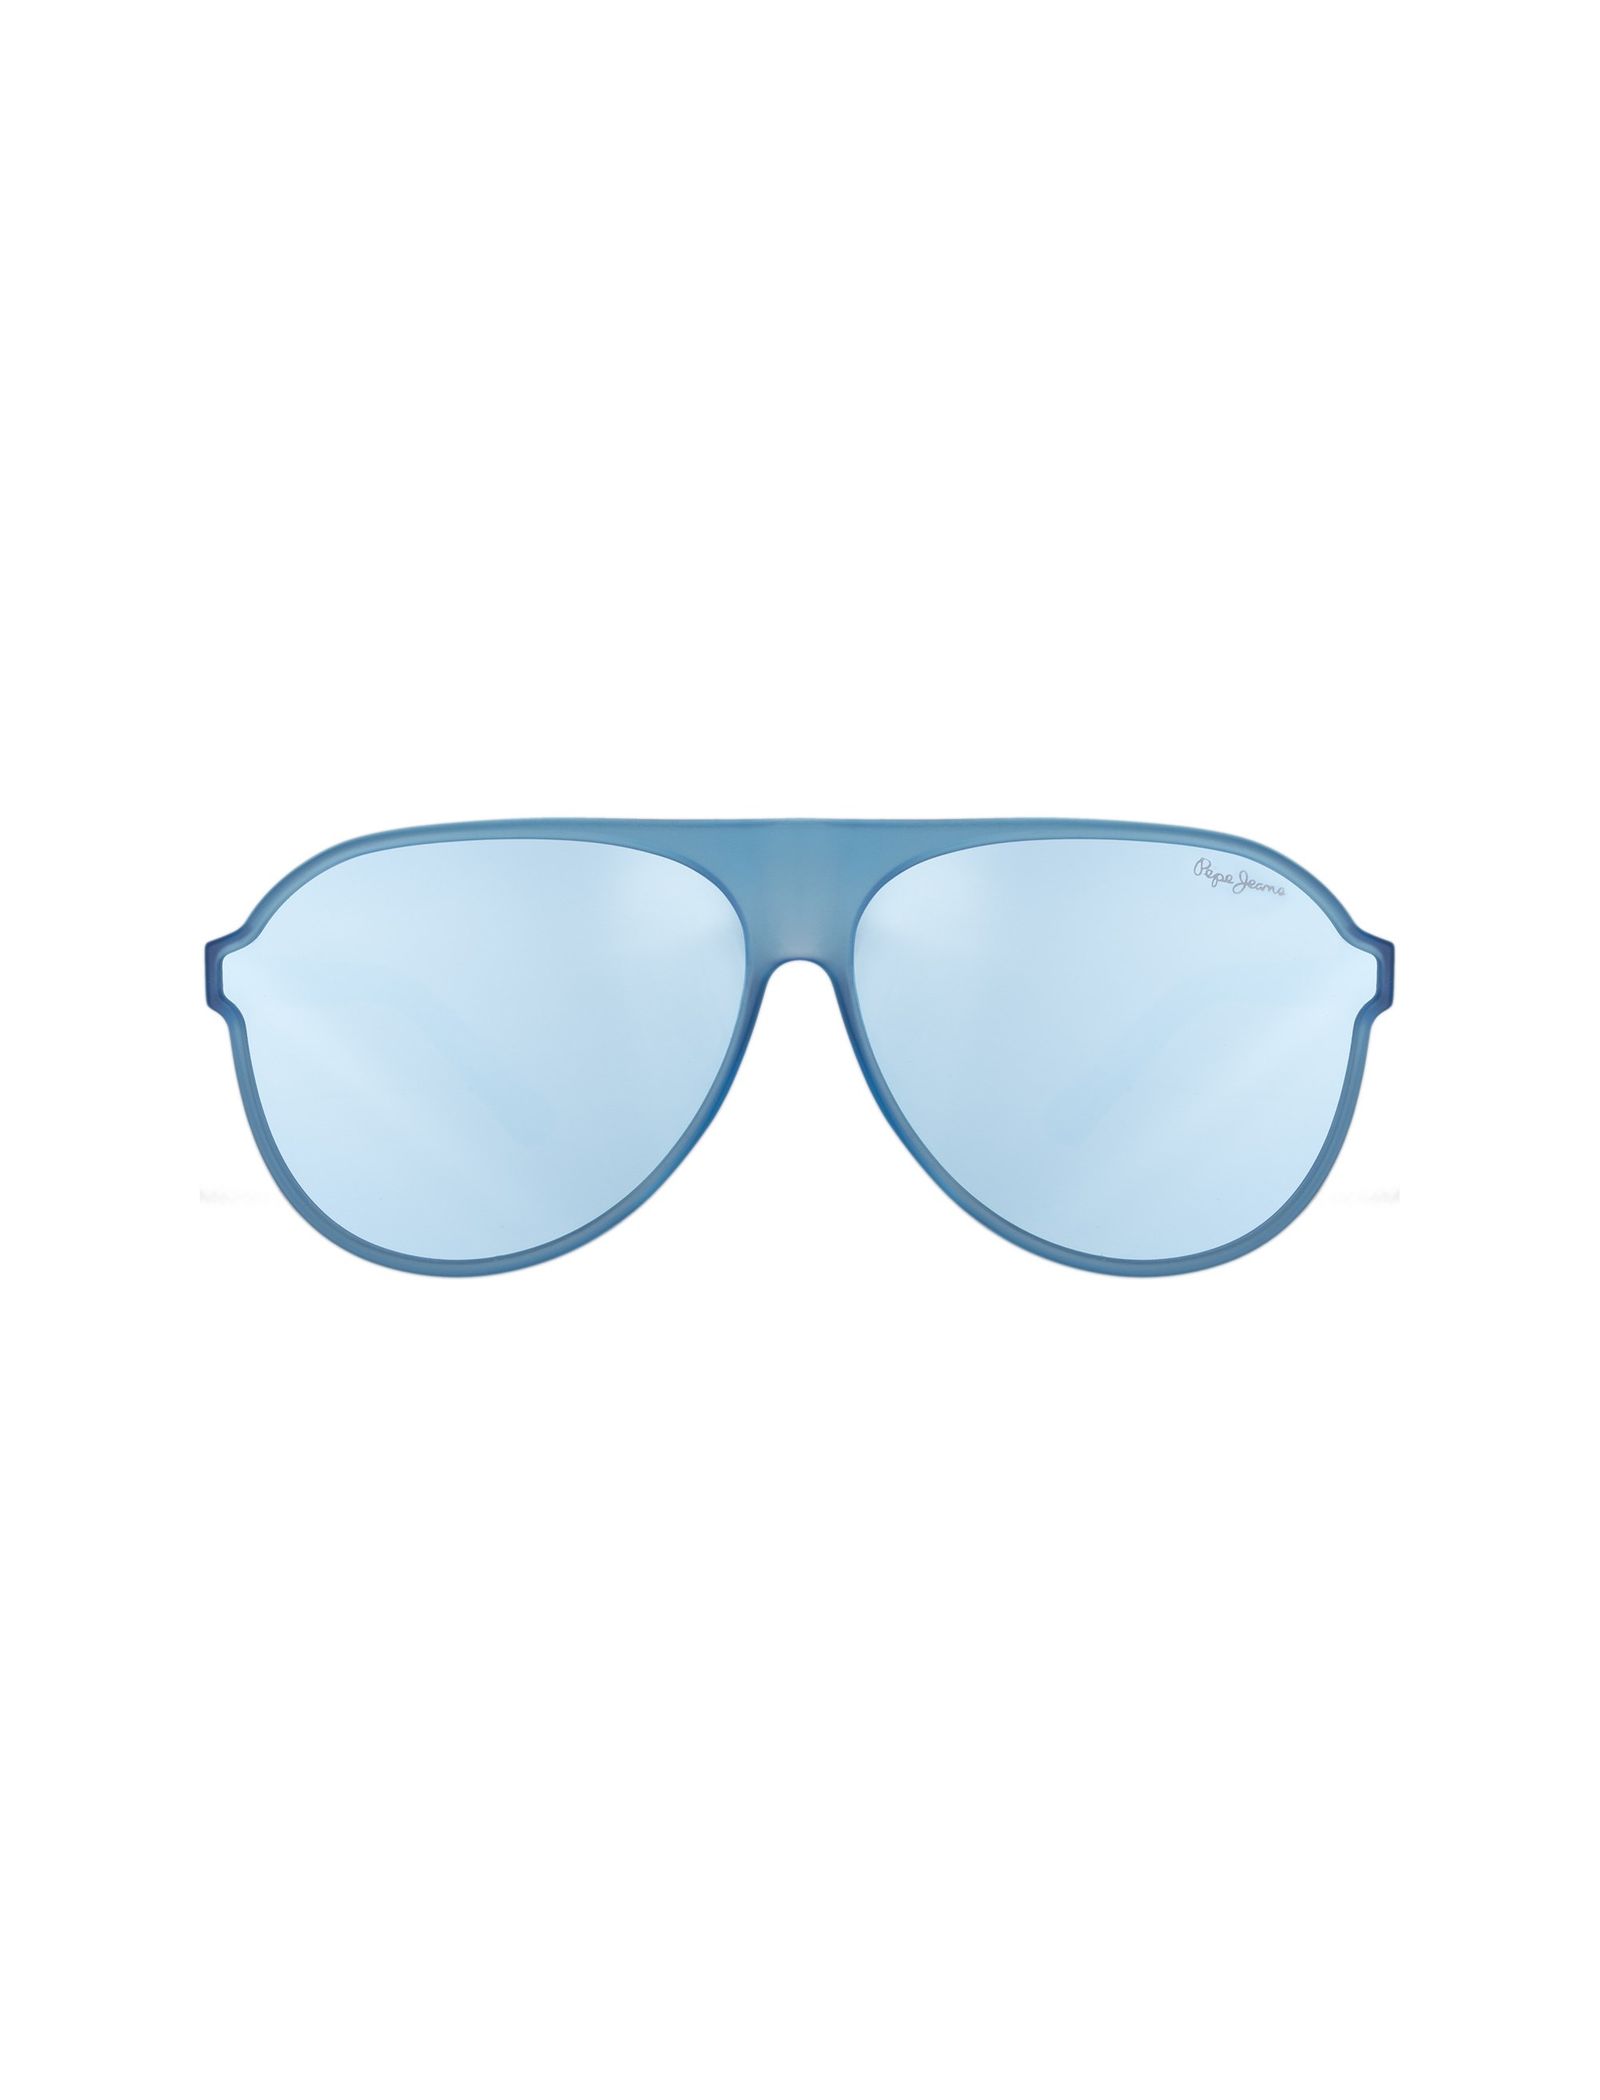 عینک آفتابی خلبانی زنانه - پپه جینز - آبي روشن - 2